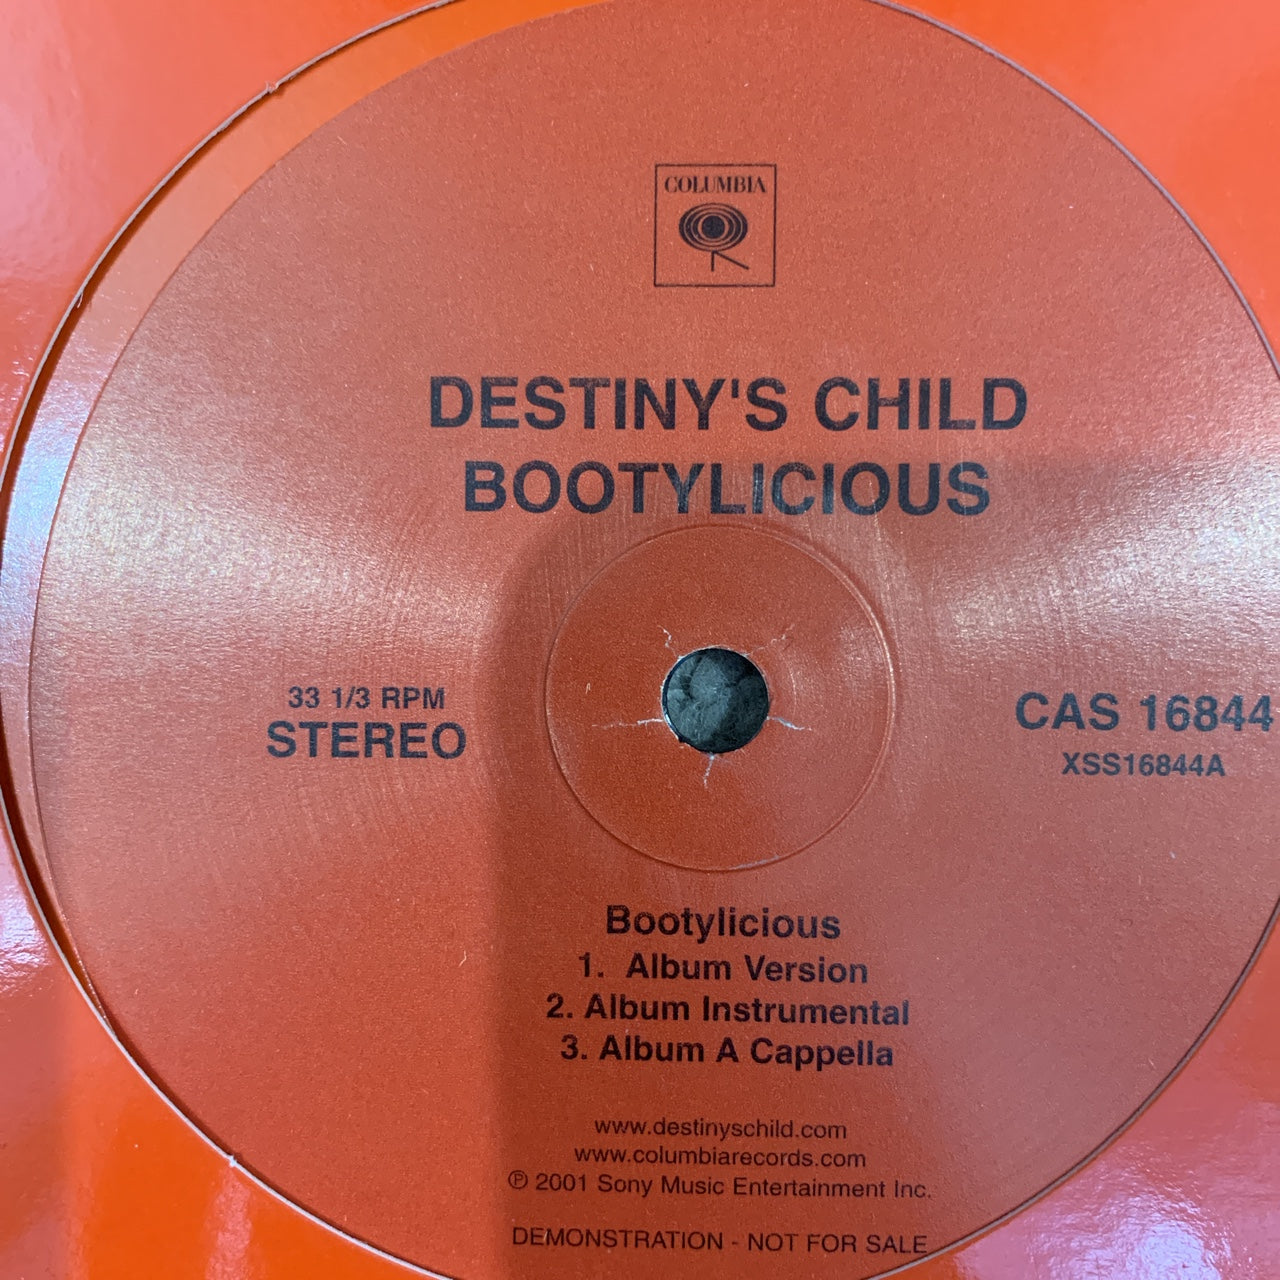 Destiny’s Child “Bootylicious”